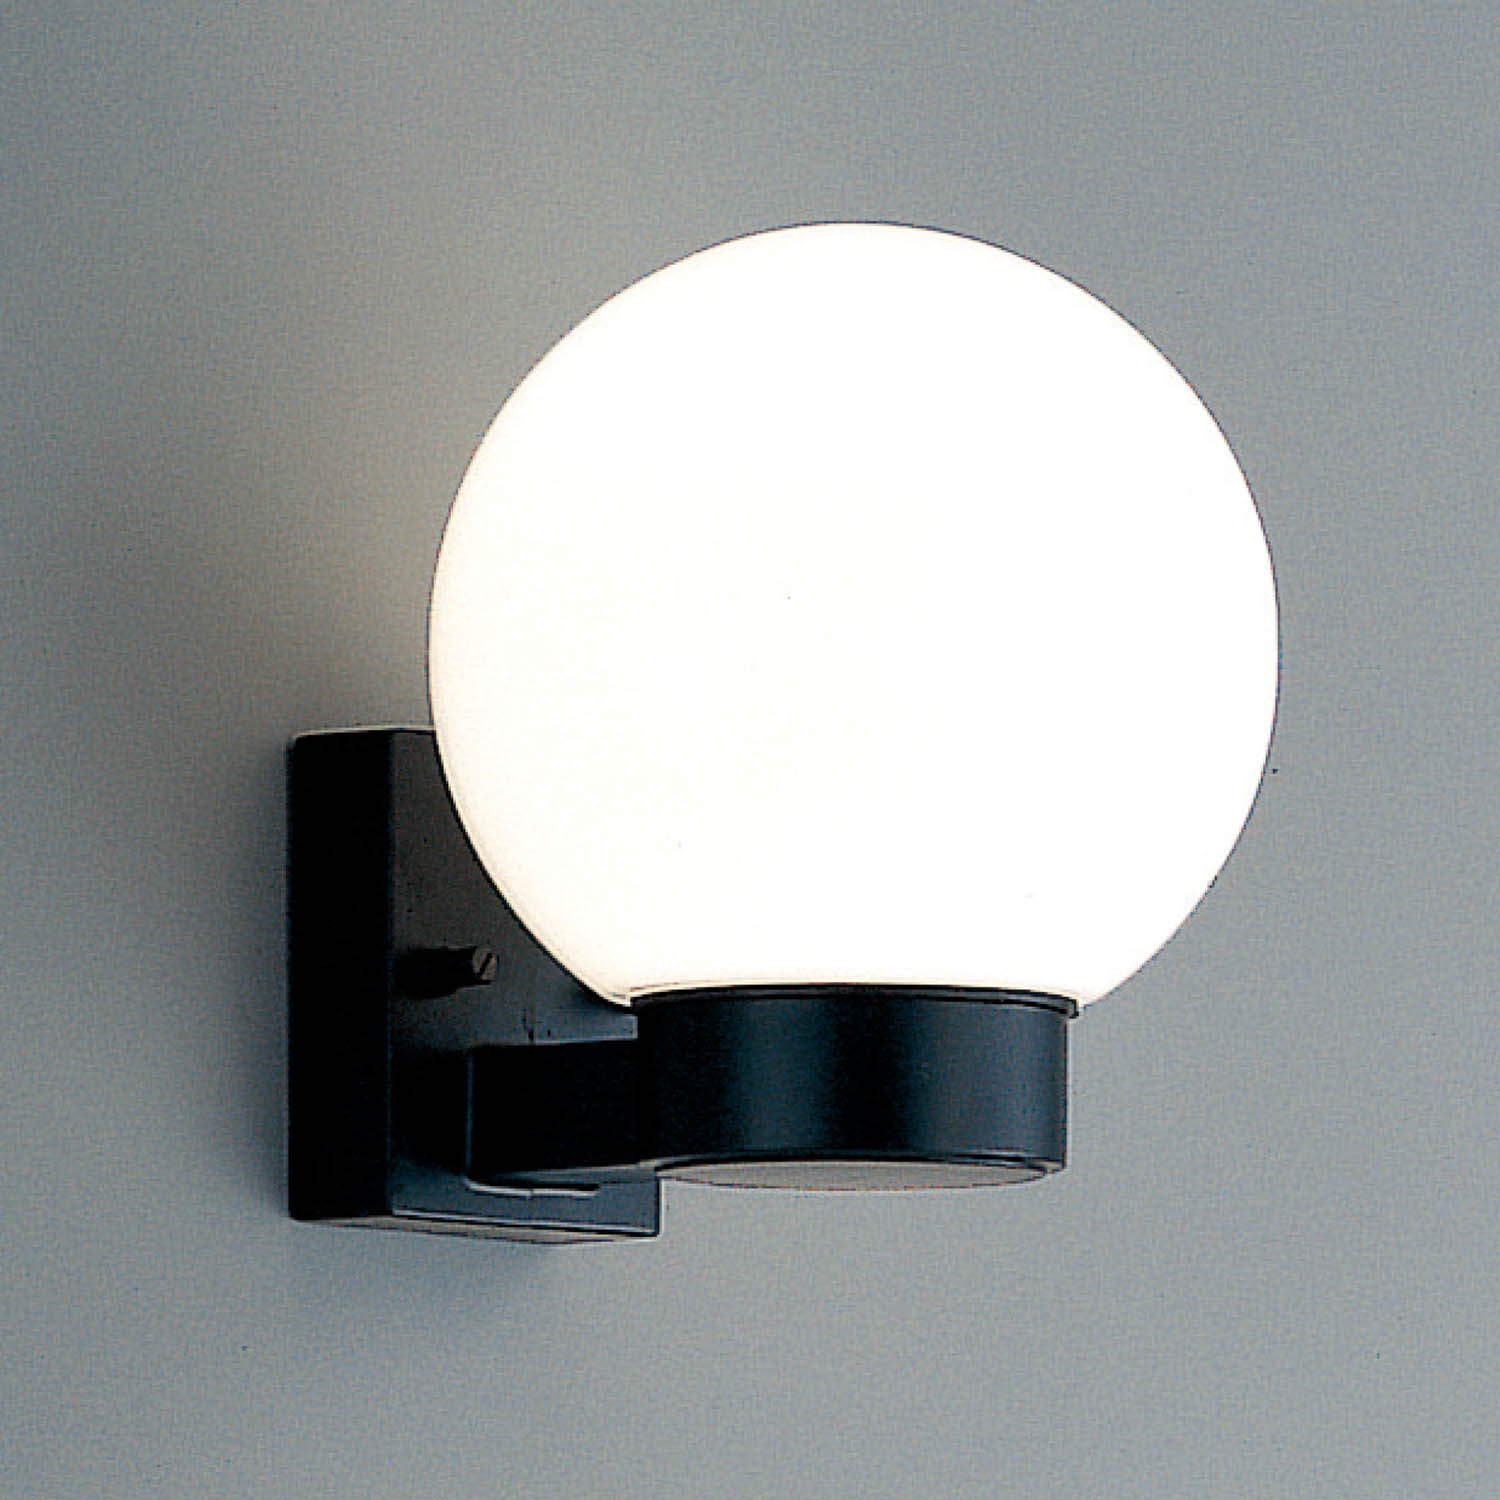 AD-3212-L 山田照明 屋外スポットライト 黒色 LED 電球色 調光 35度 - 2